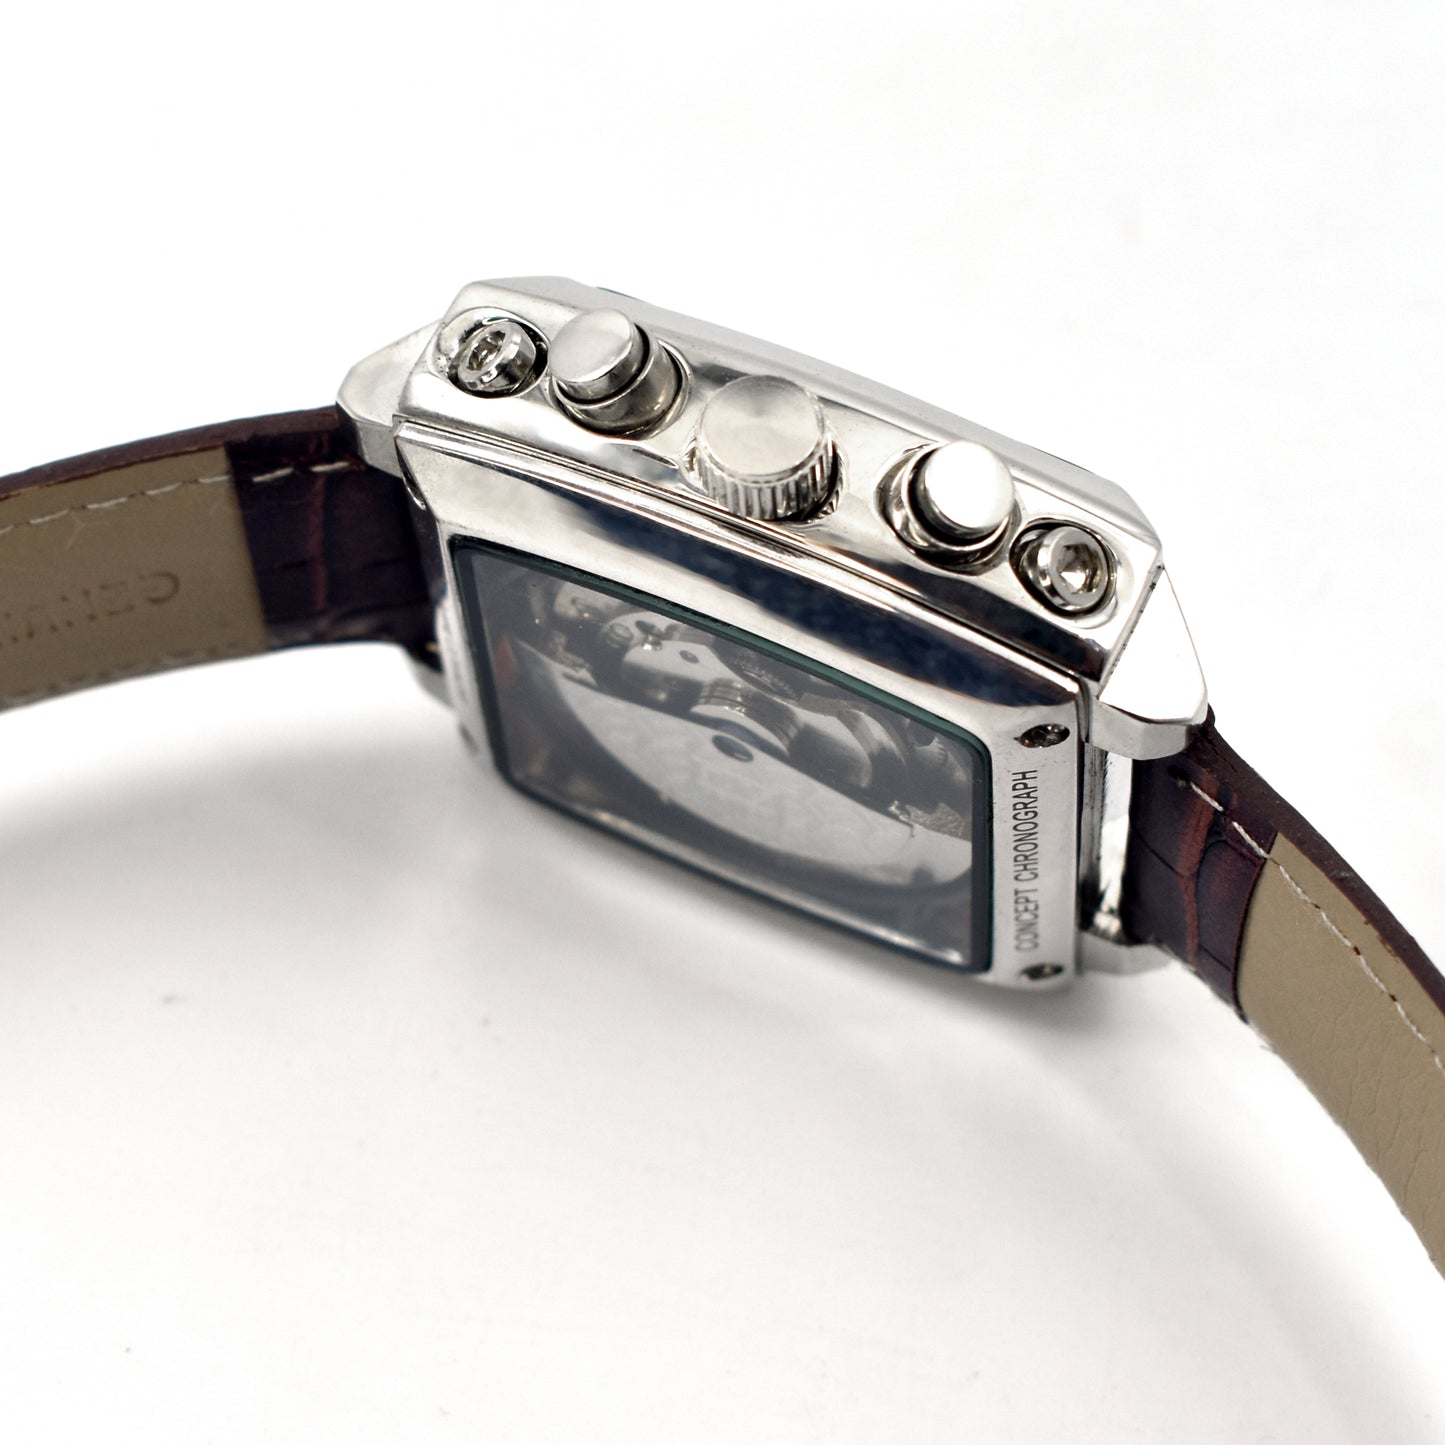 Premium Quality Mechanical Automatic Watch | TAG Watch 01